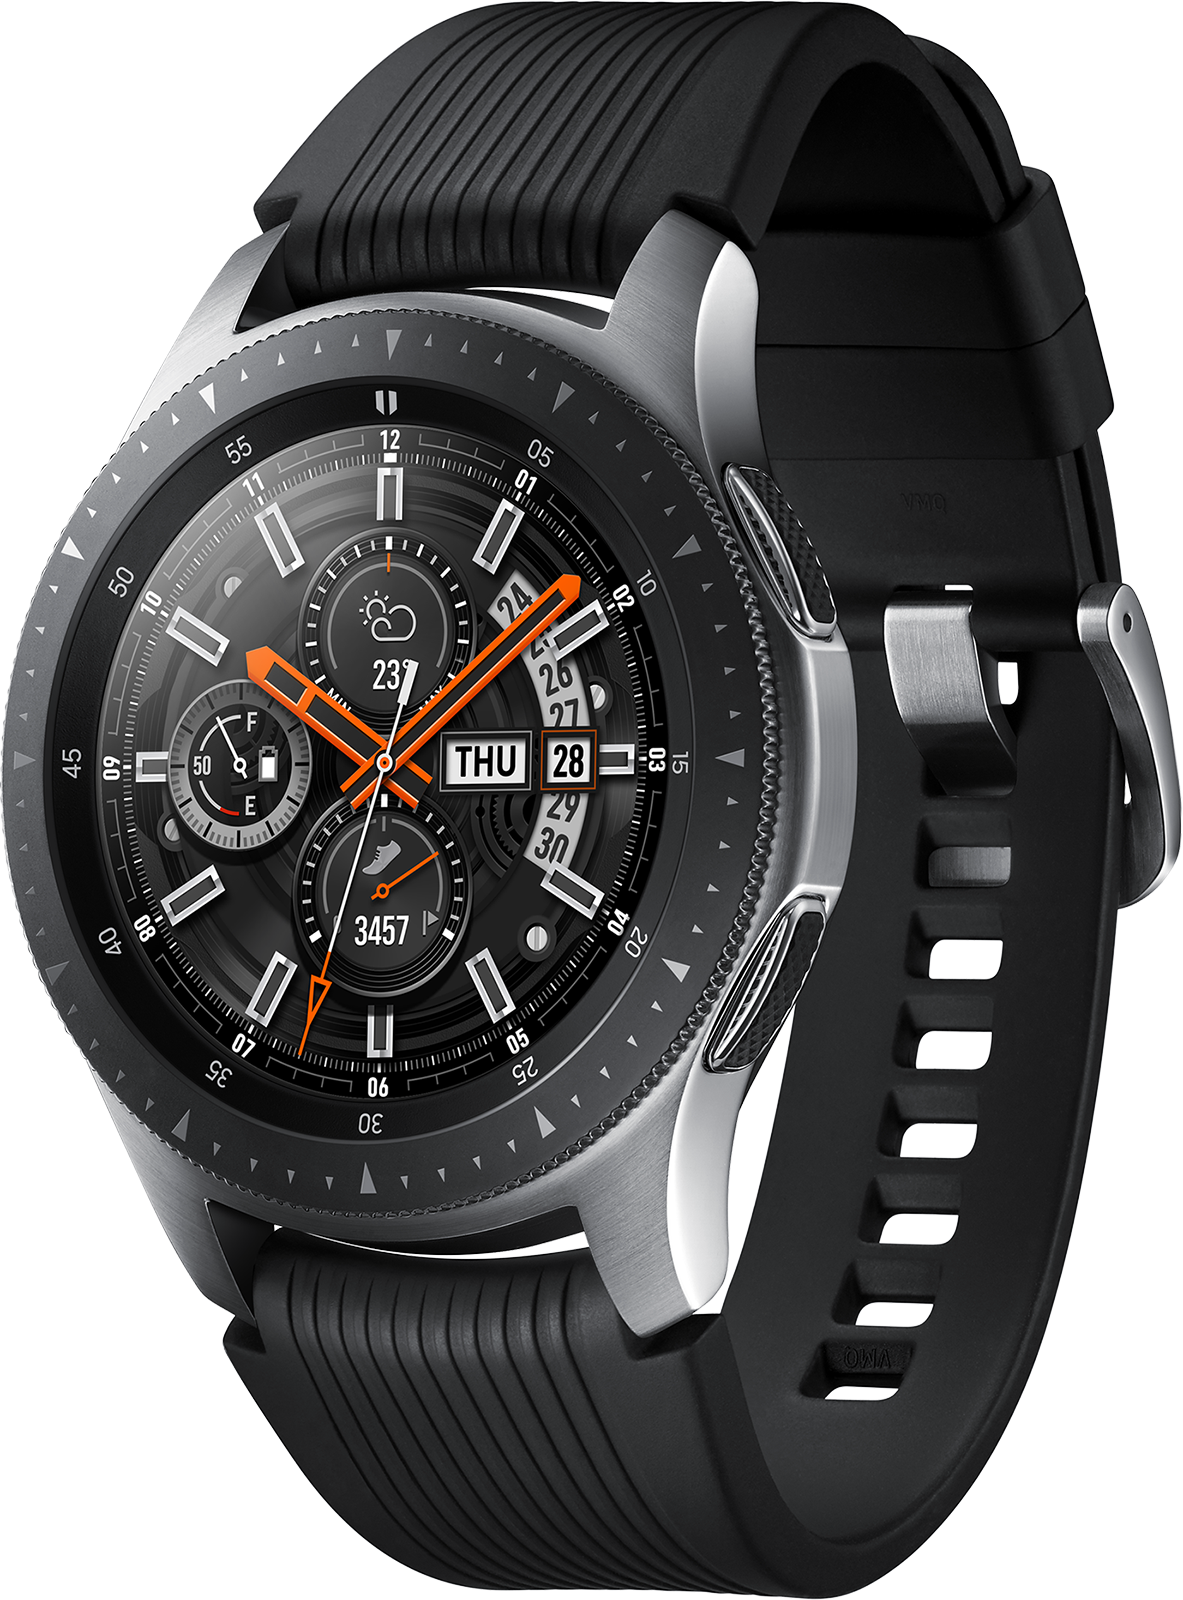 Samsung-galaxy-watch-46mm-price-malaysia - Brent Stevenson Trending